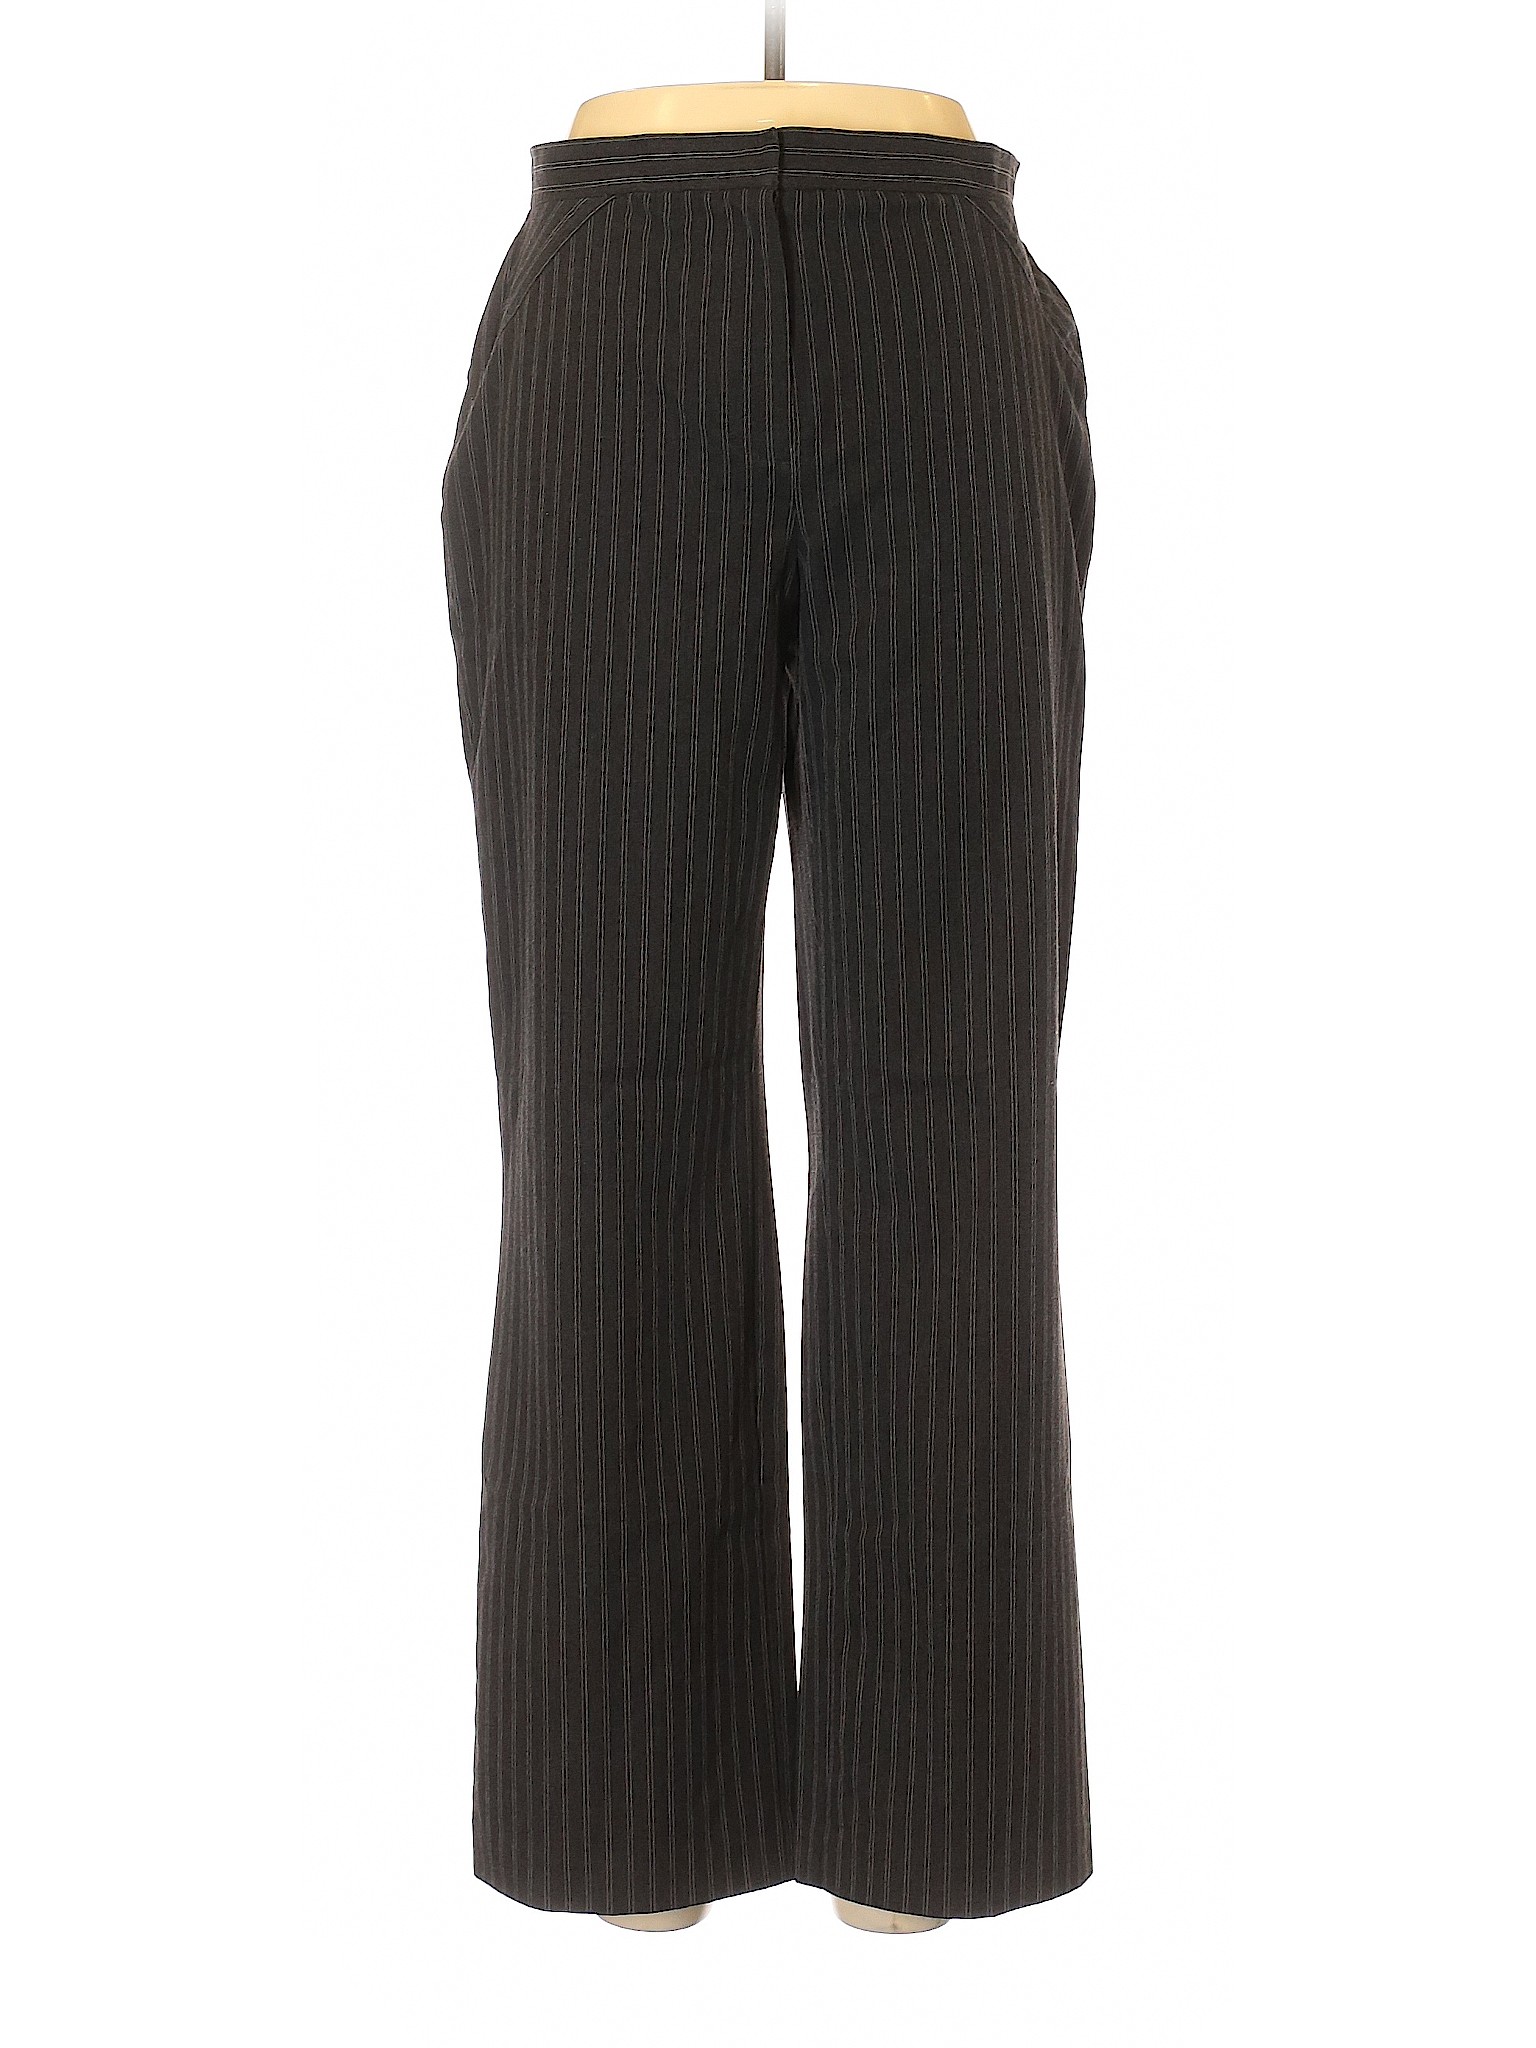 Liz Claiborne Women Black Dress Pants 10 Petites | eBay